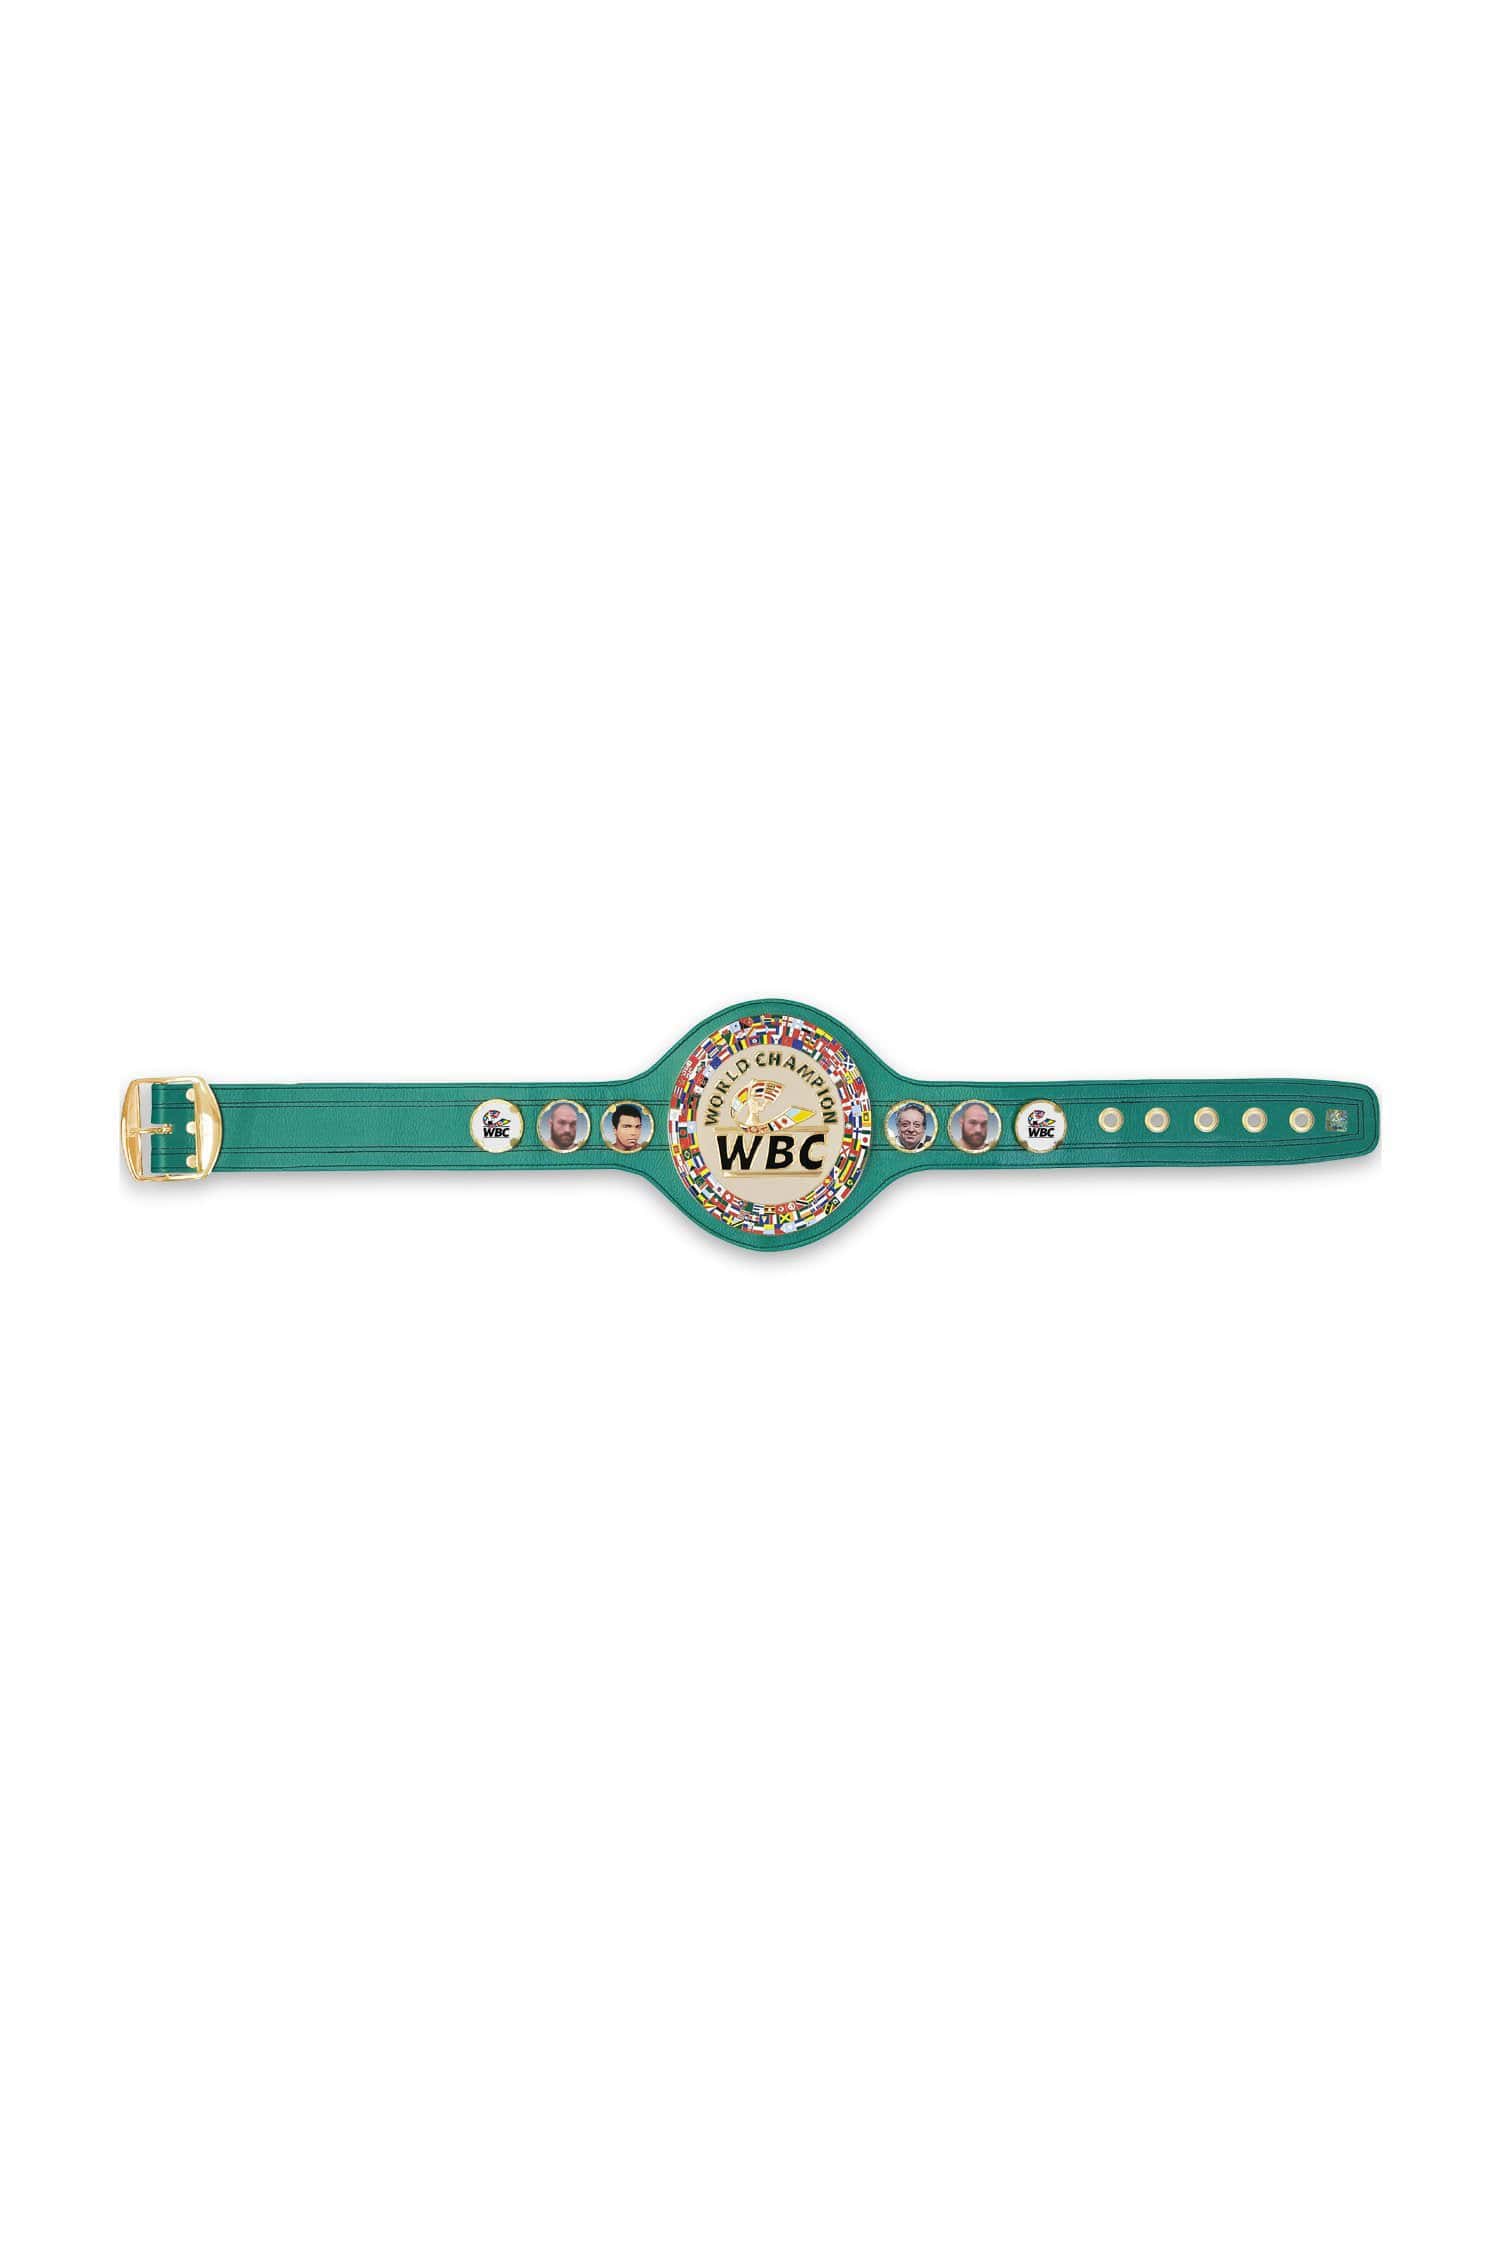 WBC Store WBC - Championship Replica Belt Tyson Fury